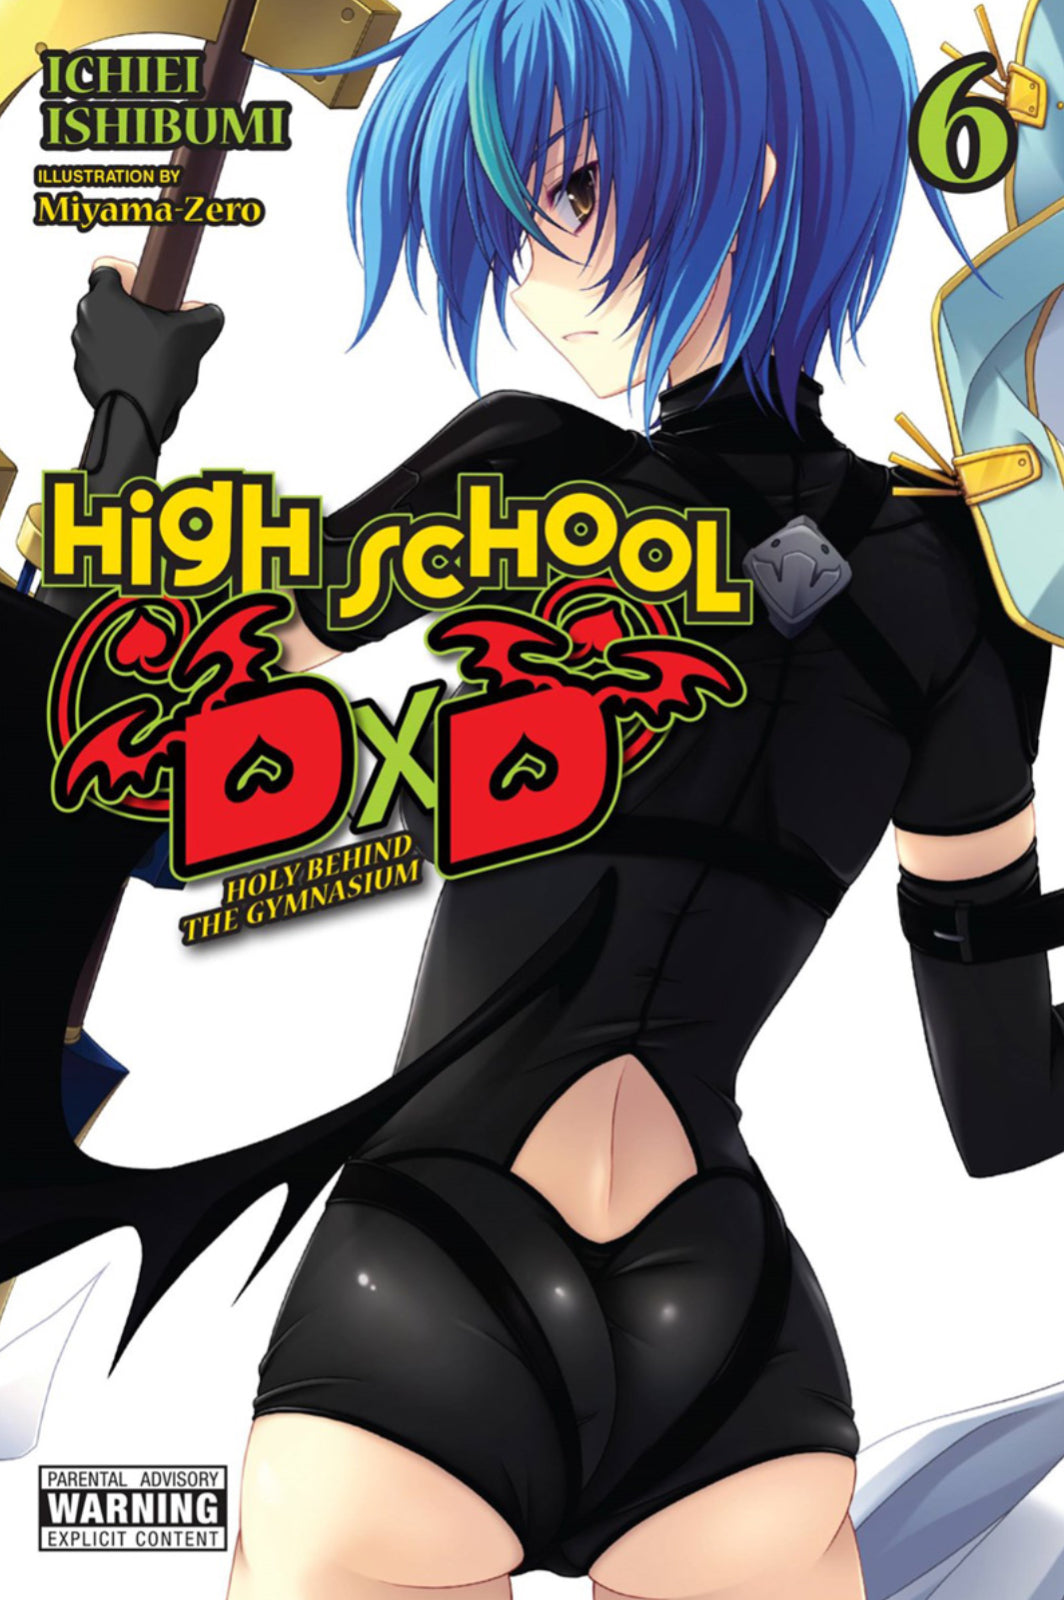 High School DxD Novel Volume 6 Holy Behind The Gymnasium Manga